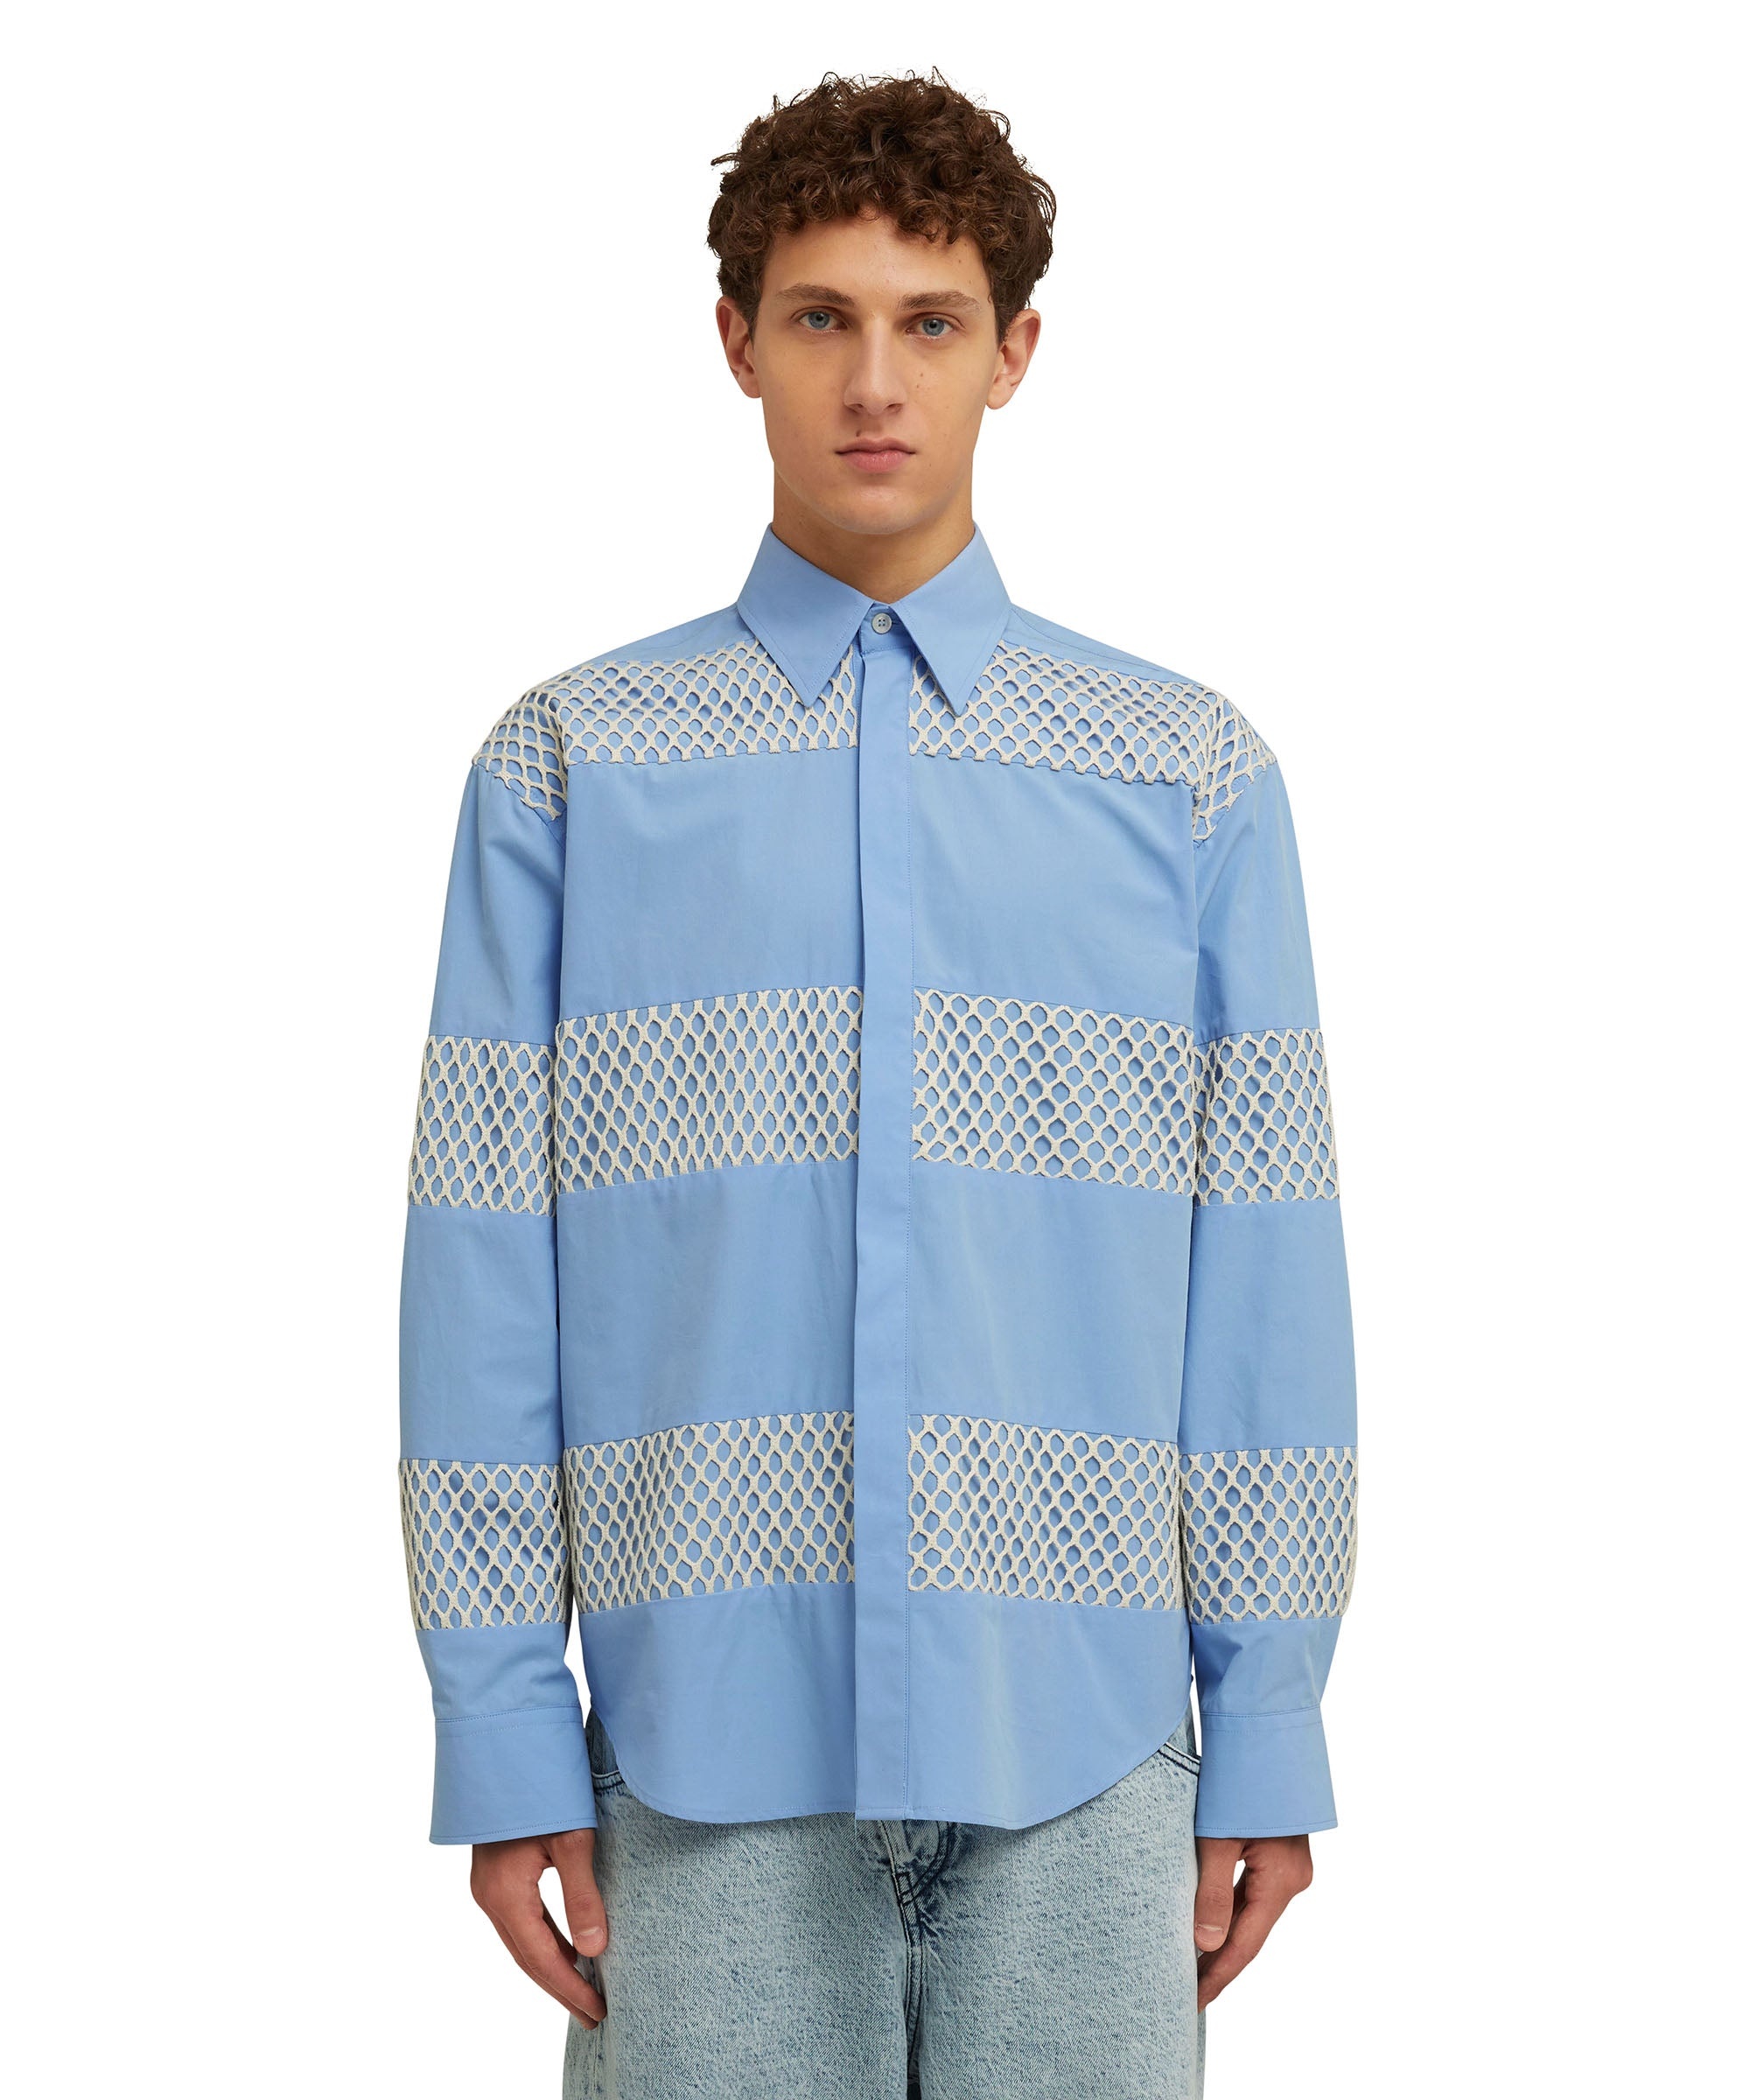 Organic poplin cotton shirt with mesh details - 3